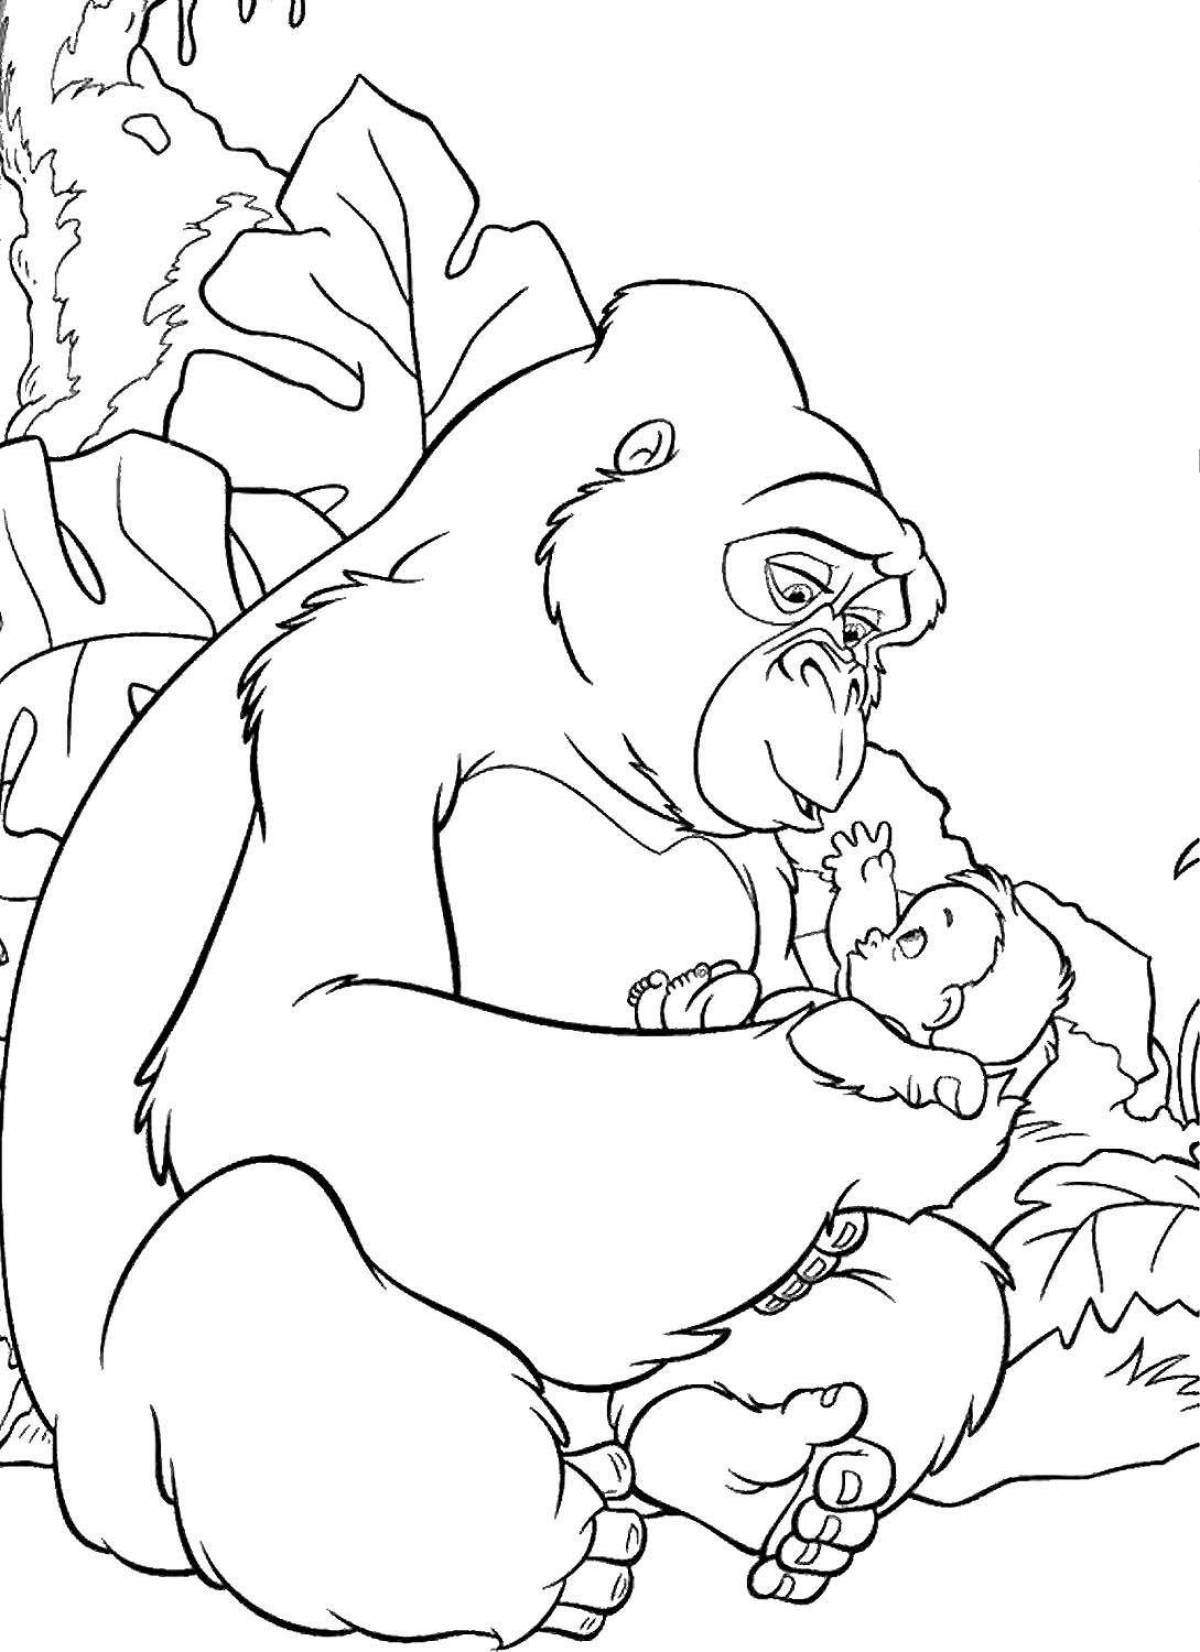 Cute gorilla coloring book for kids